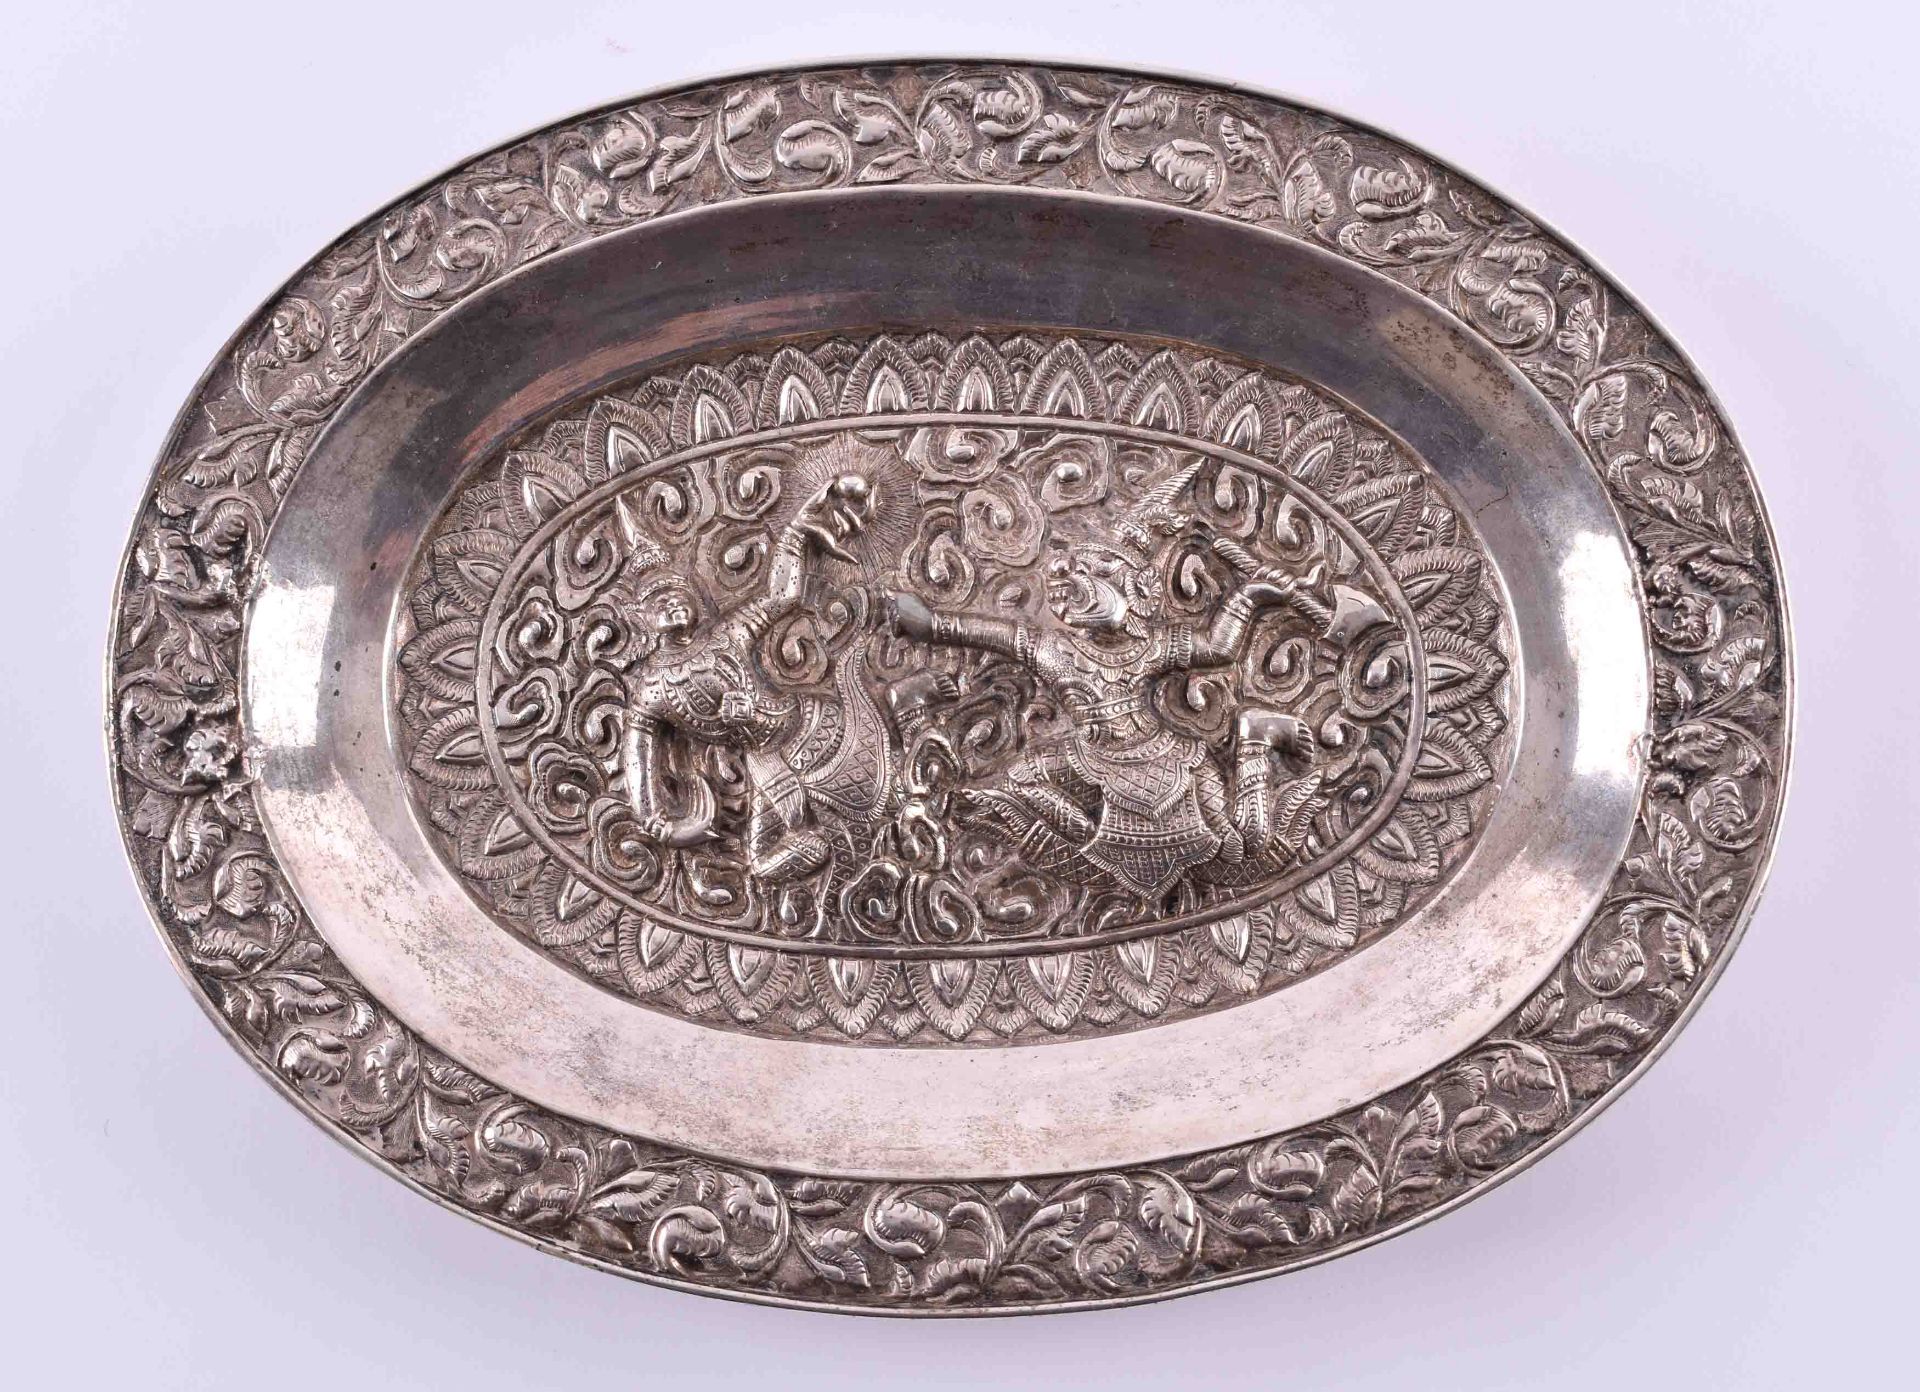 Balinese silver bowlsilver bowl with mythological scene, dimensions: 22 cm x 16.5 cm x 2.5 cm, raw